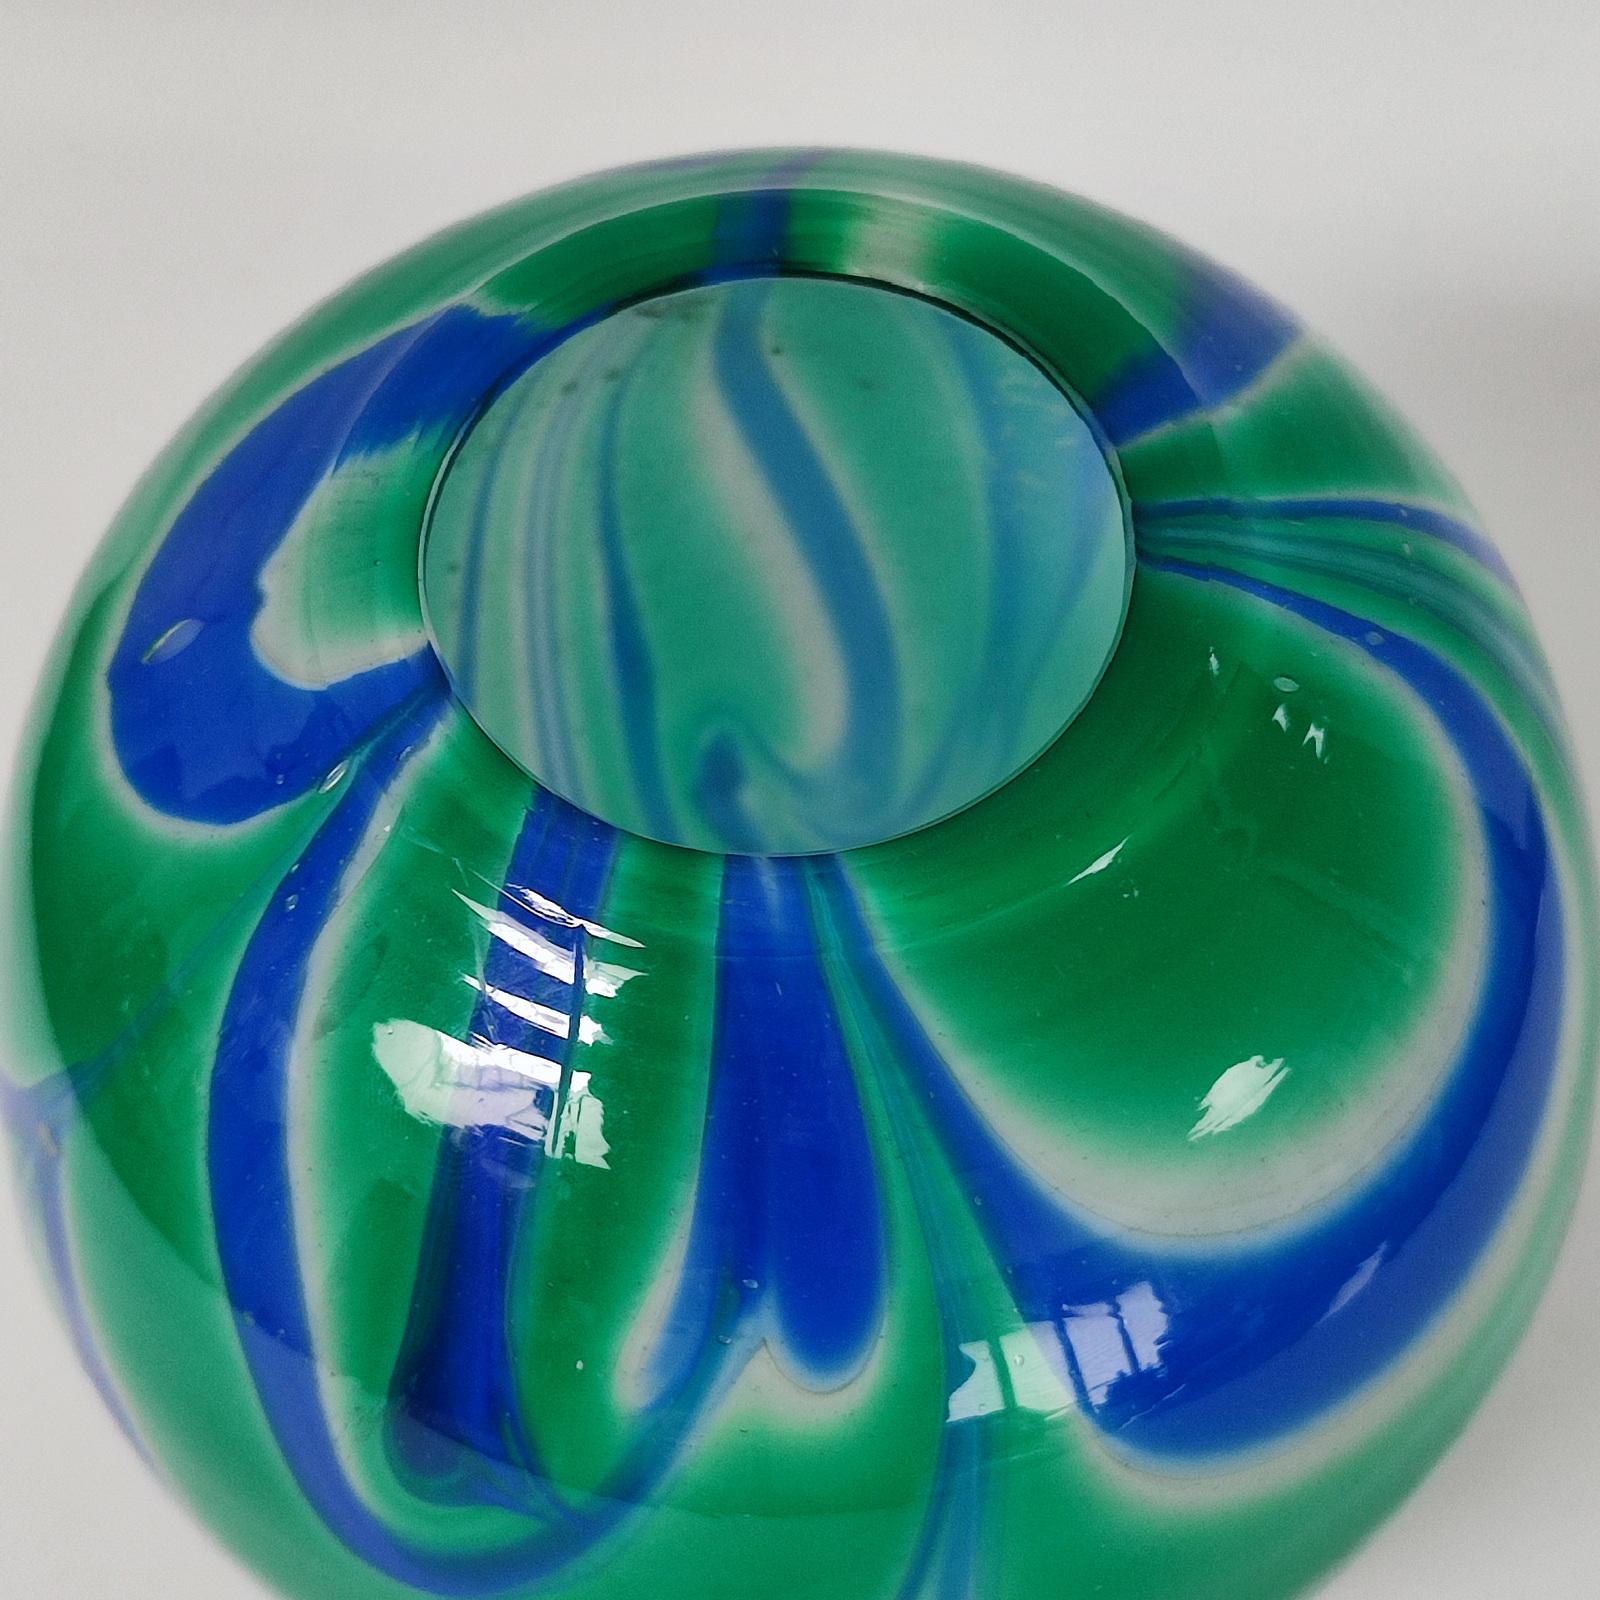 Blue, Green & White Murano Glass Vase by Carlo Moretti, Italy 1990s For Sale 3